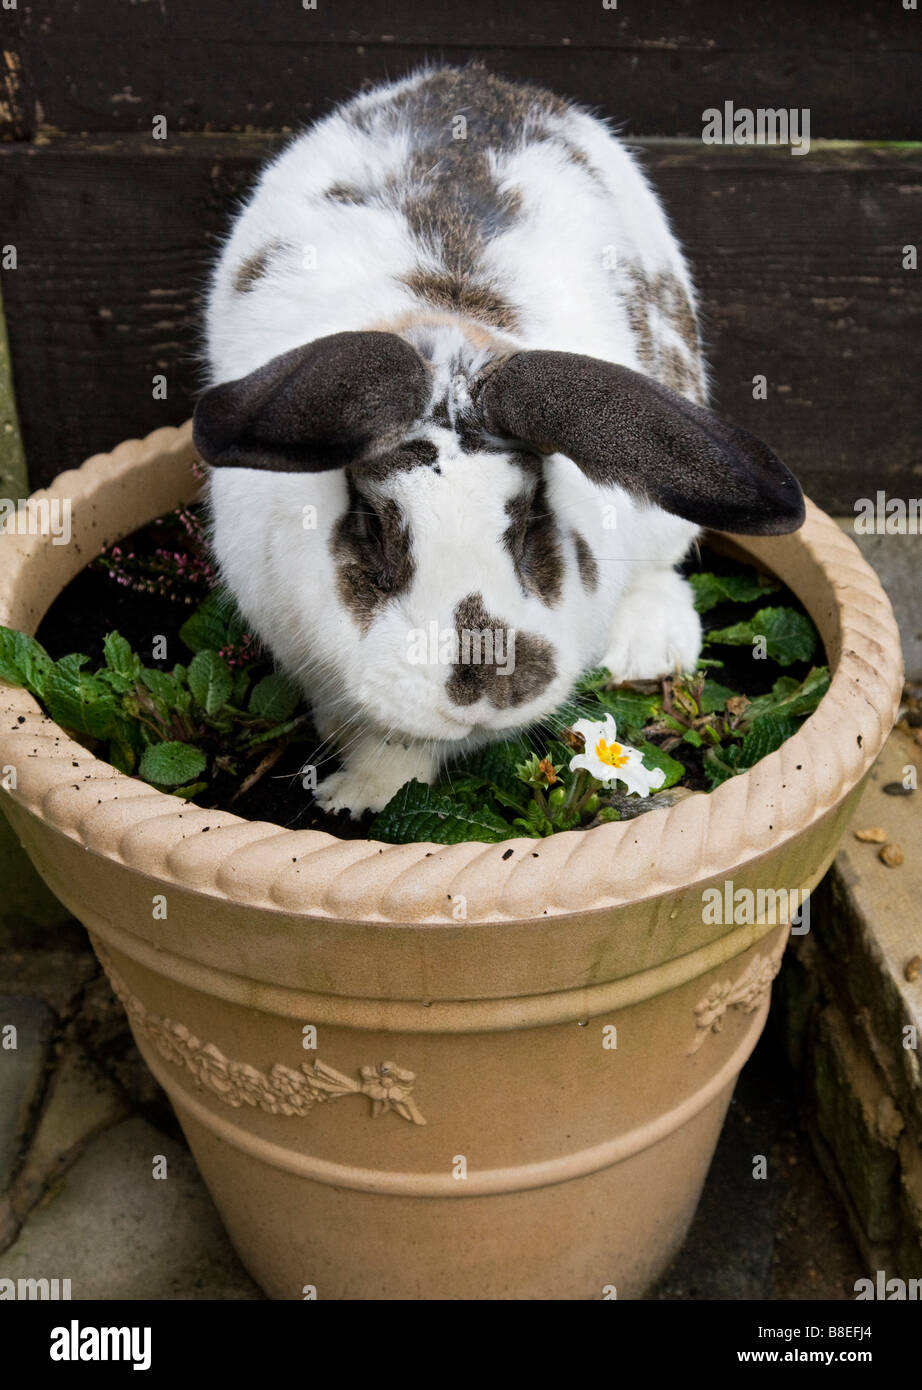 British giant rabbit stealing plants Stock Photo